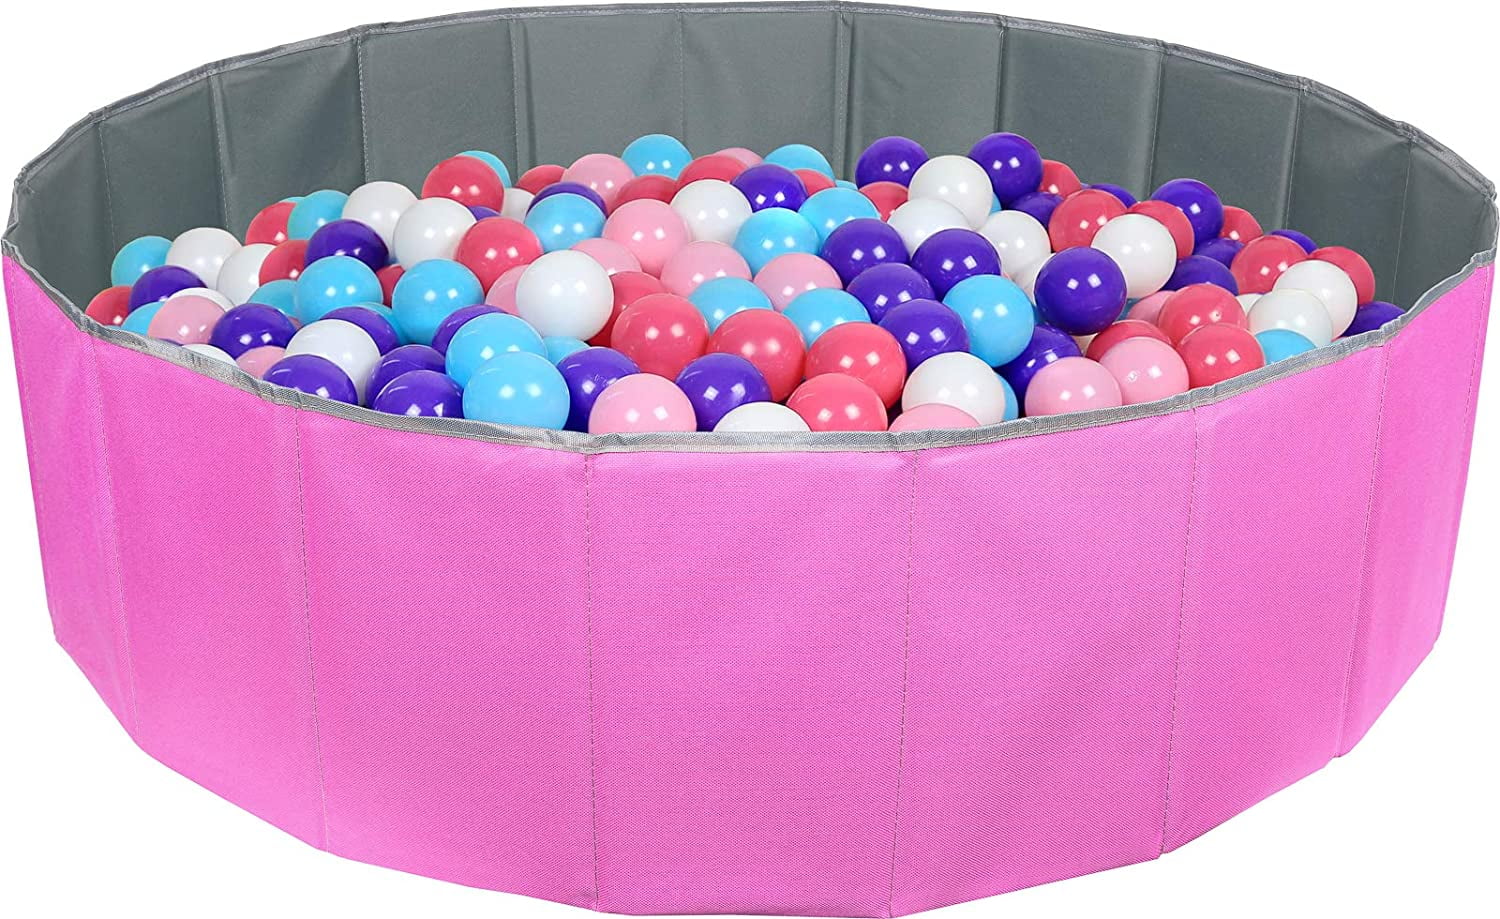 Kids Ball Pit Balls Storage Net Bag Toys Organizer for 200 Balls Without bal BS 